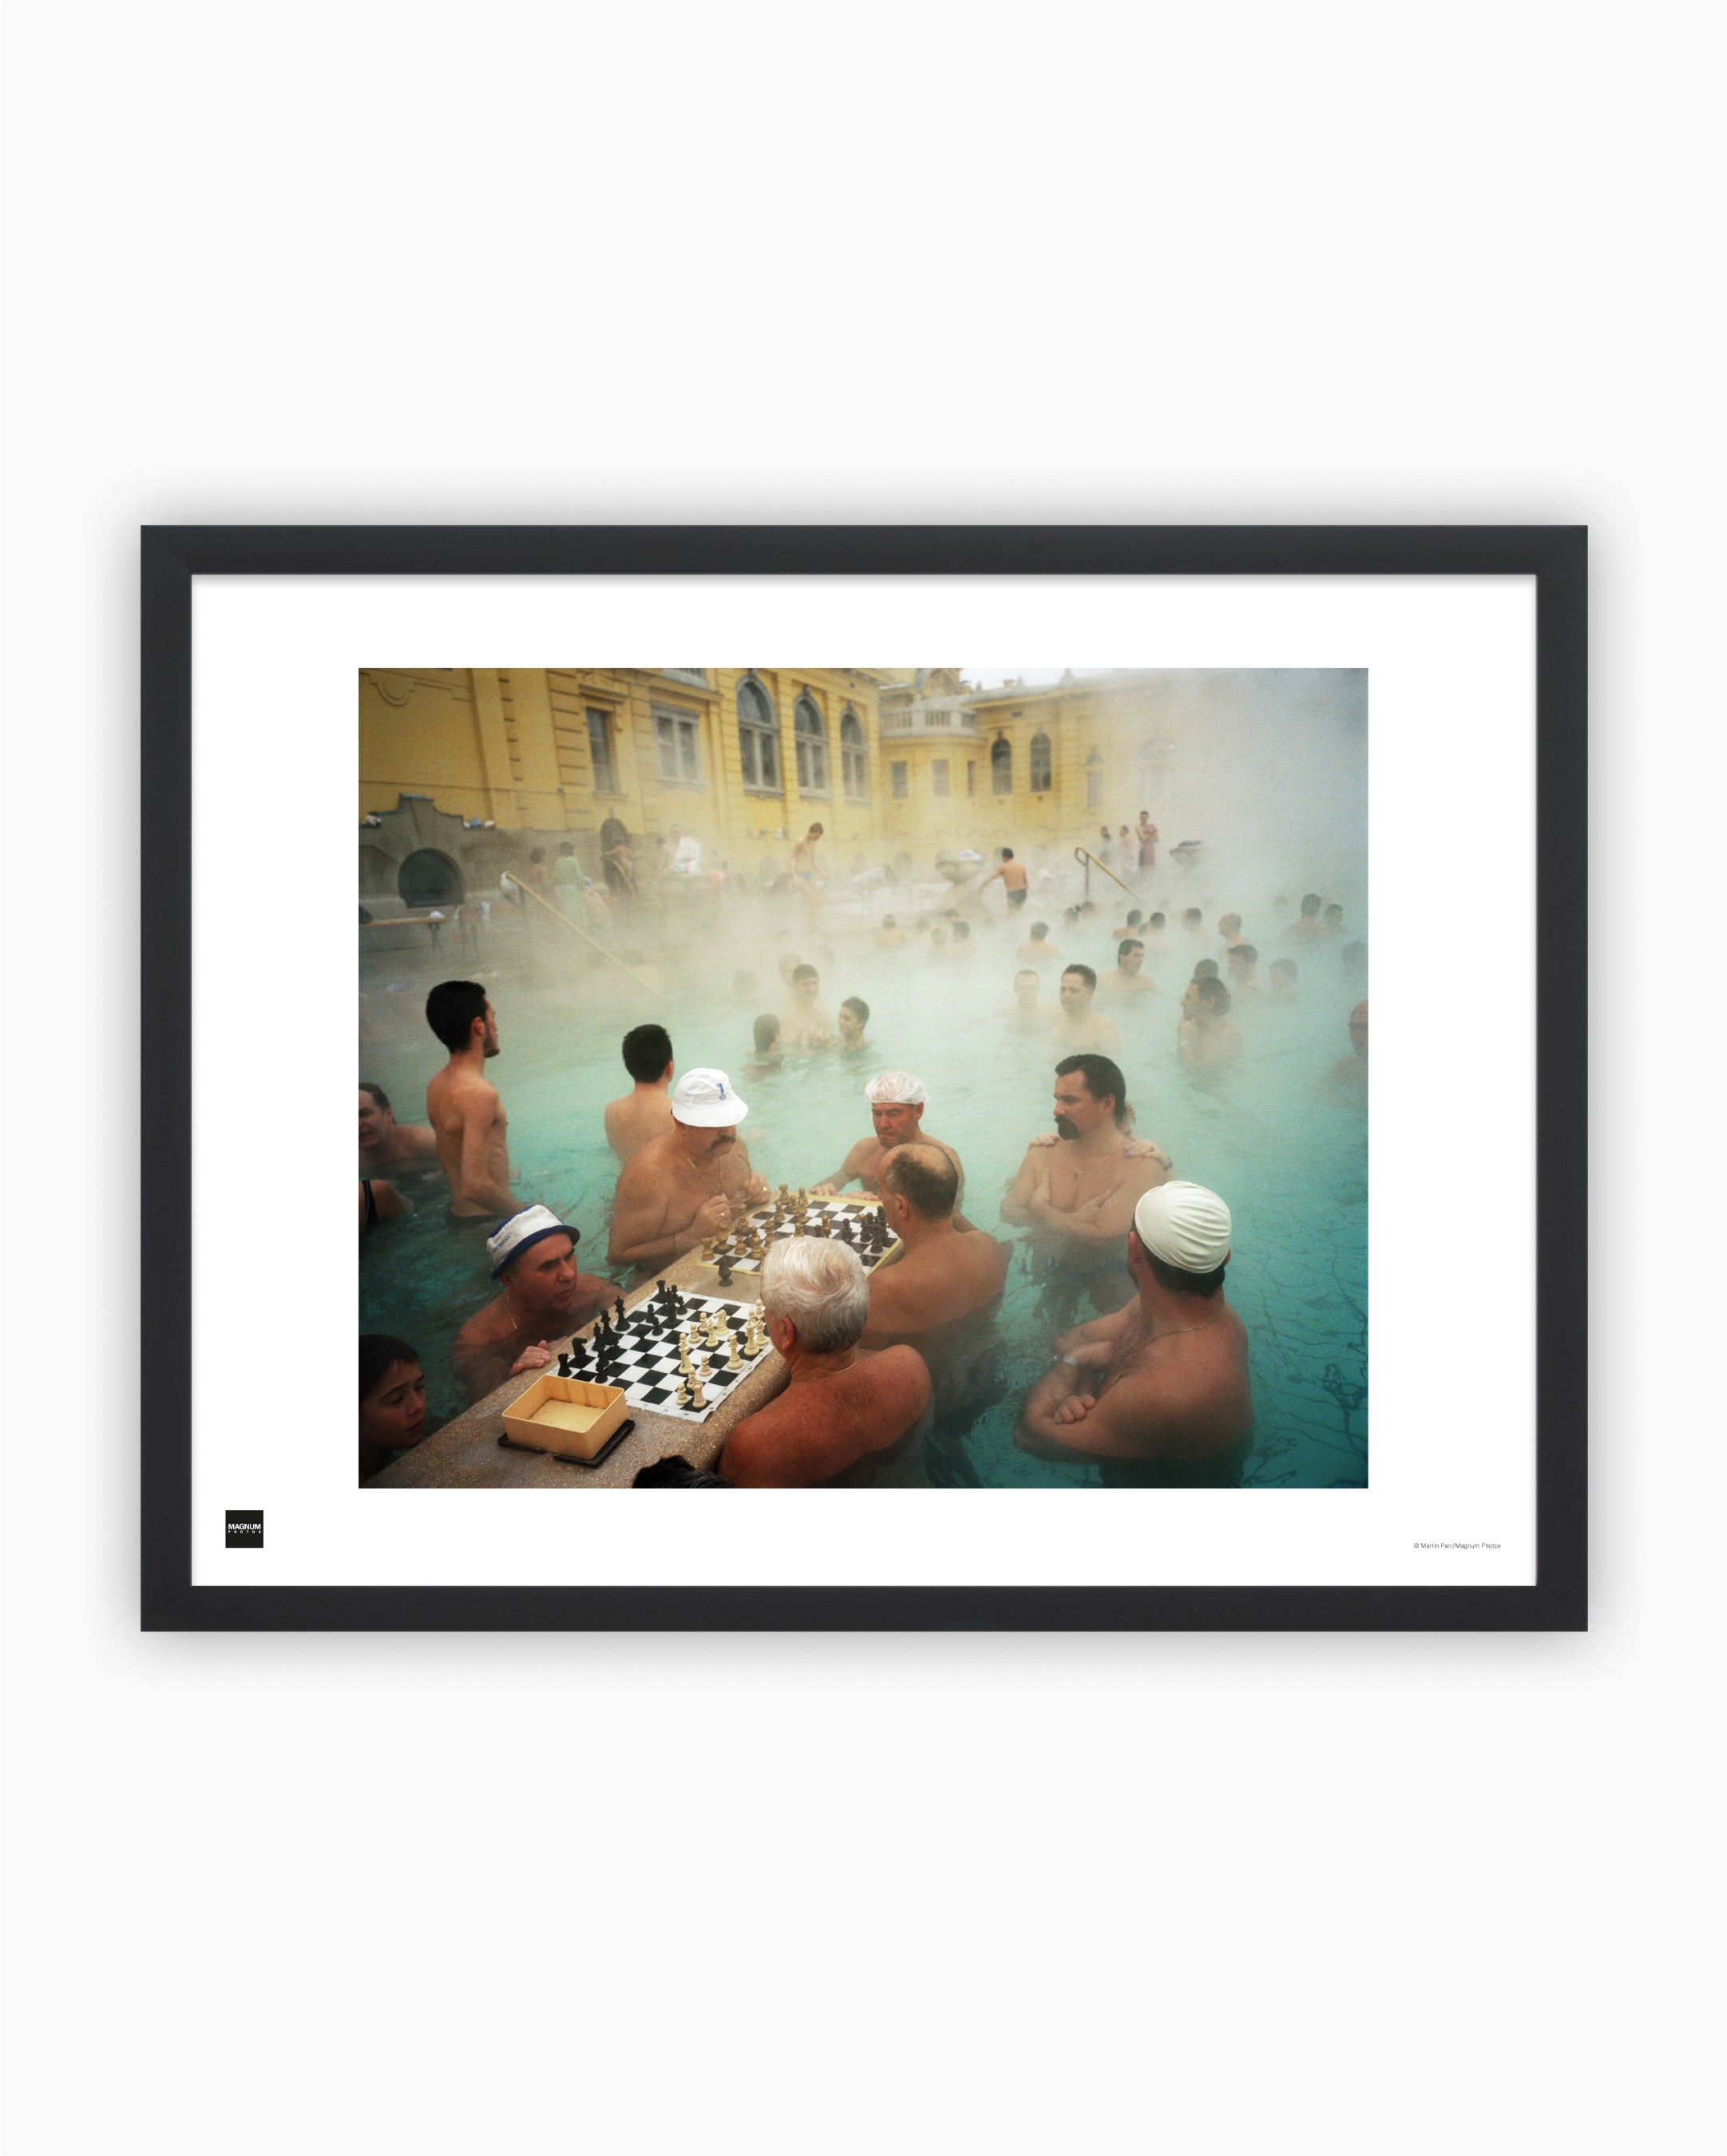 Magnum Poster: Szechenyi thermal baths. Budapest, Hungary, 2000